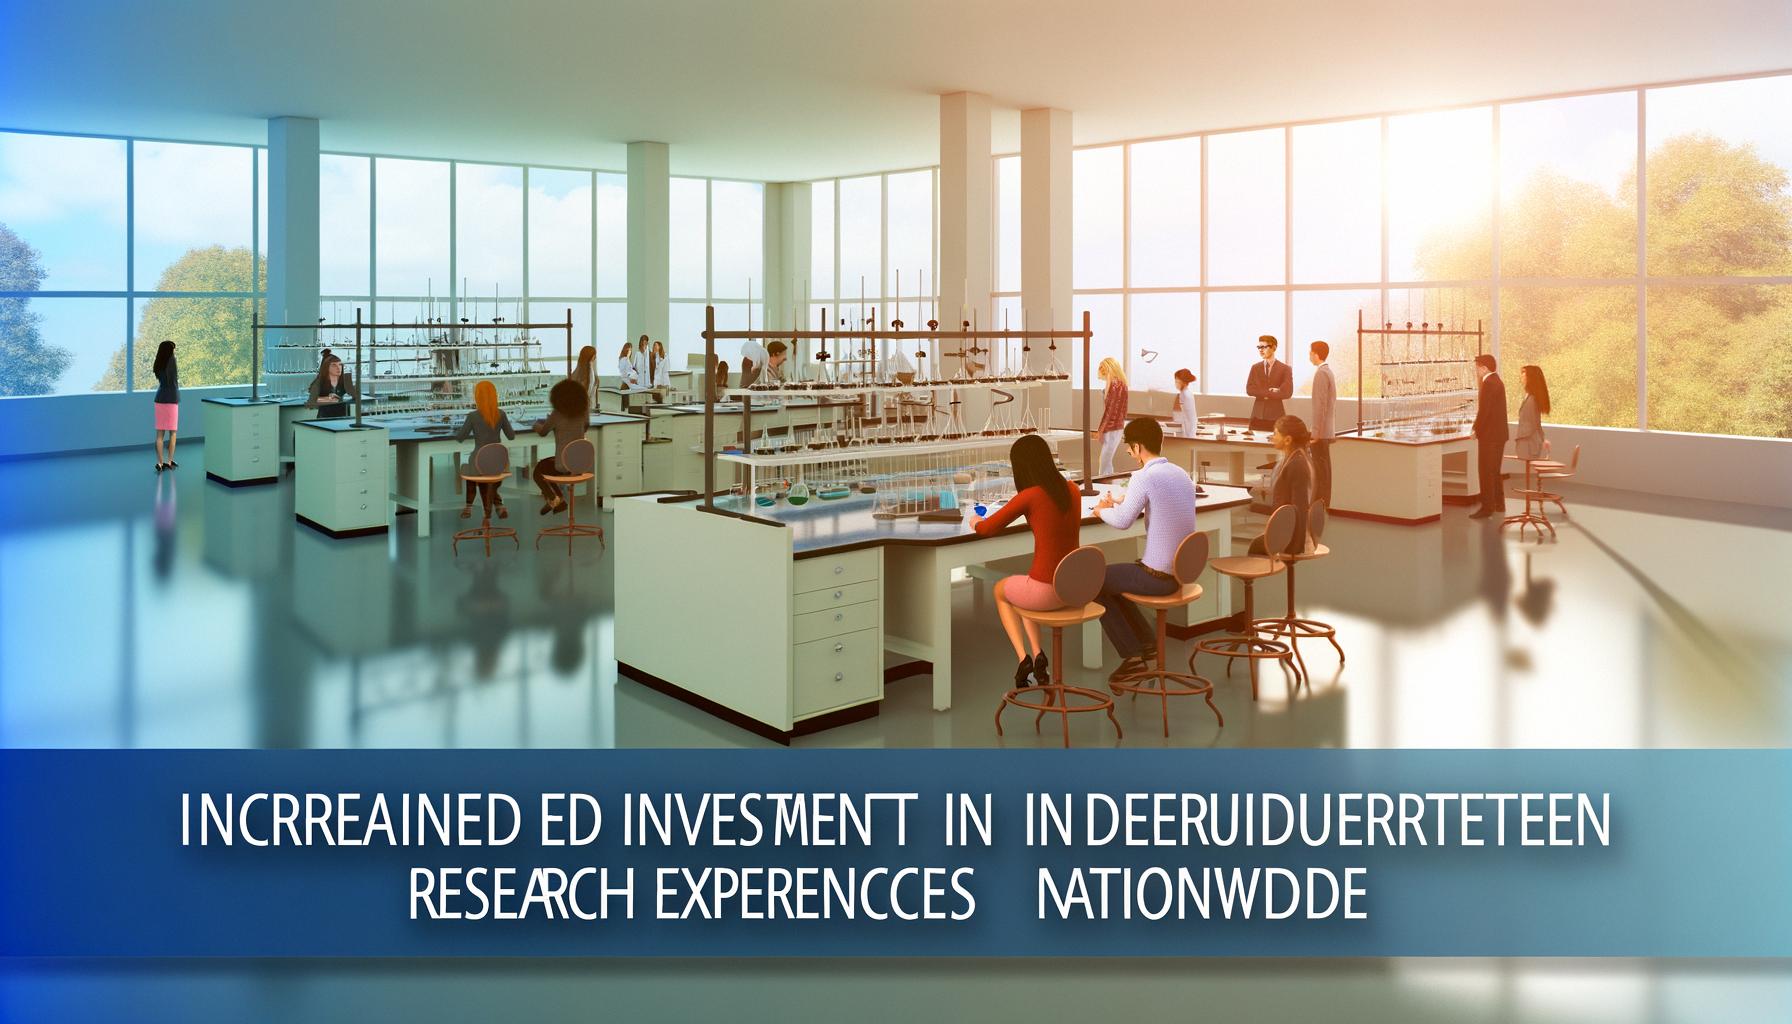 Gaining momentum in allocating resources towards undergraduate research programs across institutions.